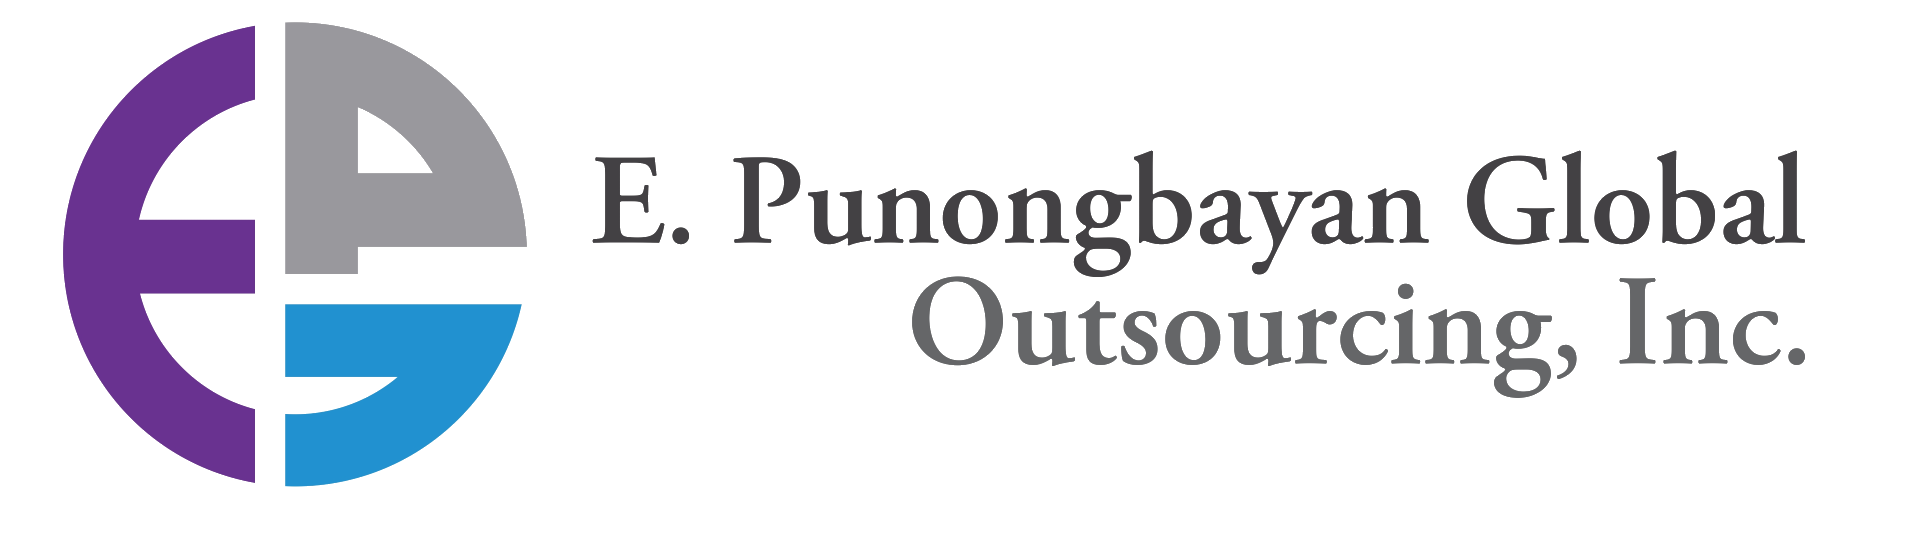 E. PUNONGBAYAN GLOBAL OUTSOURCING, INC.